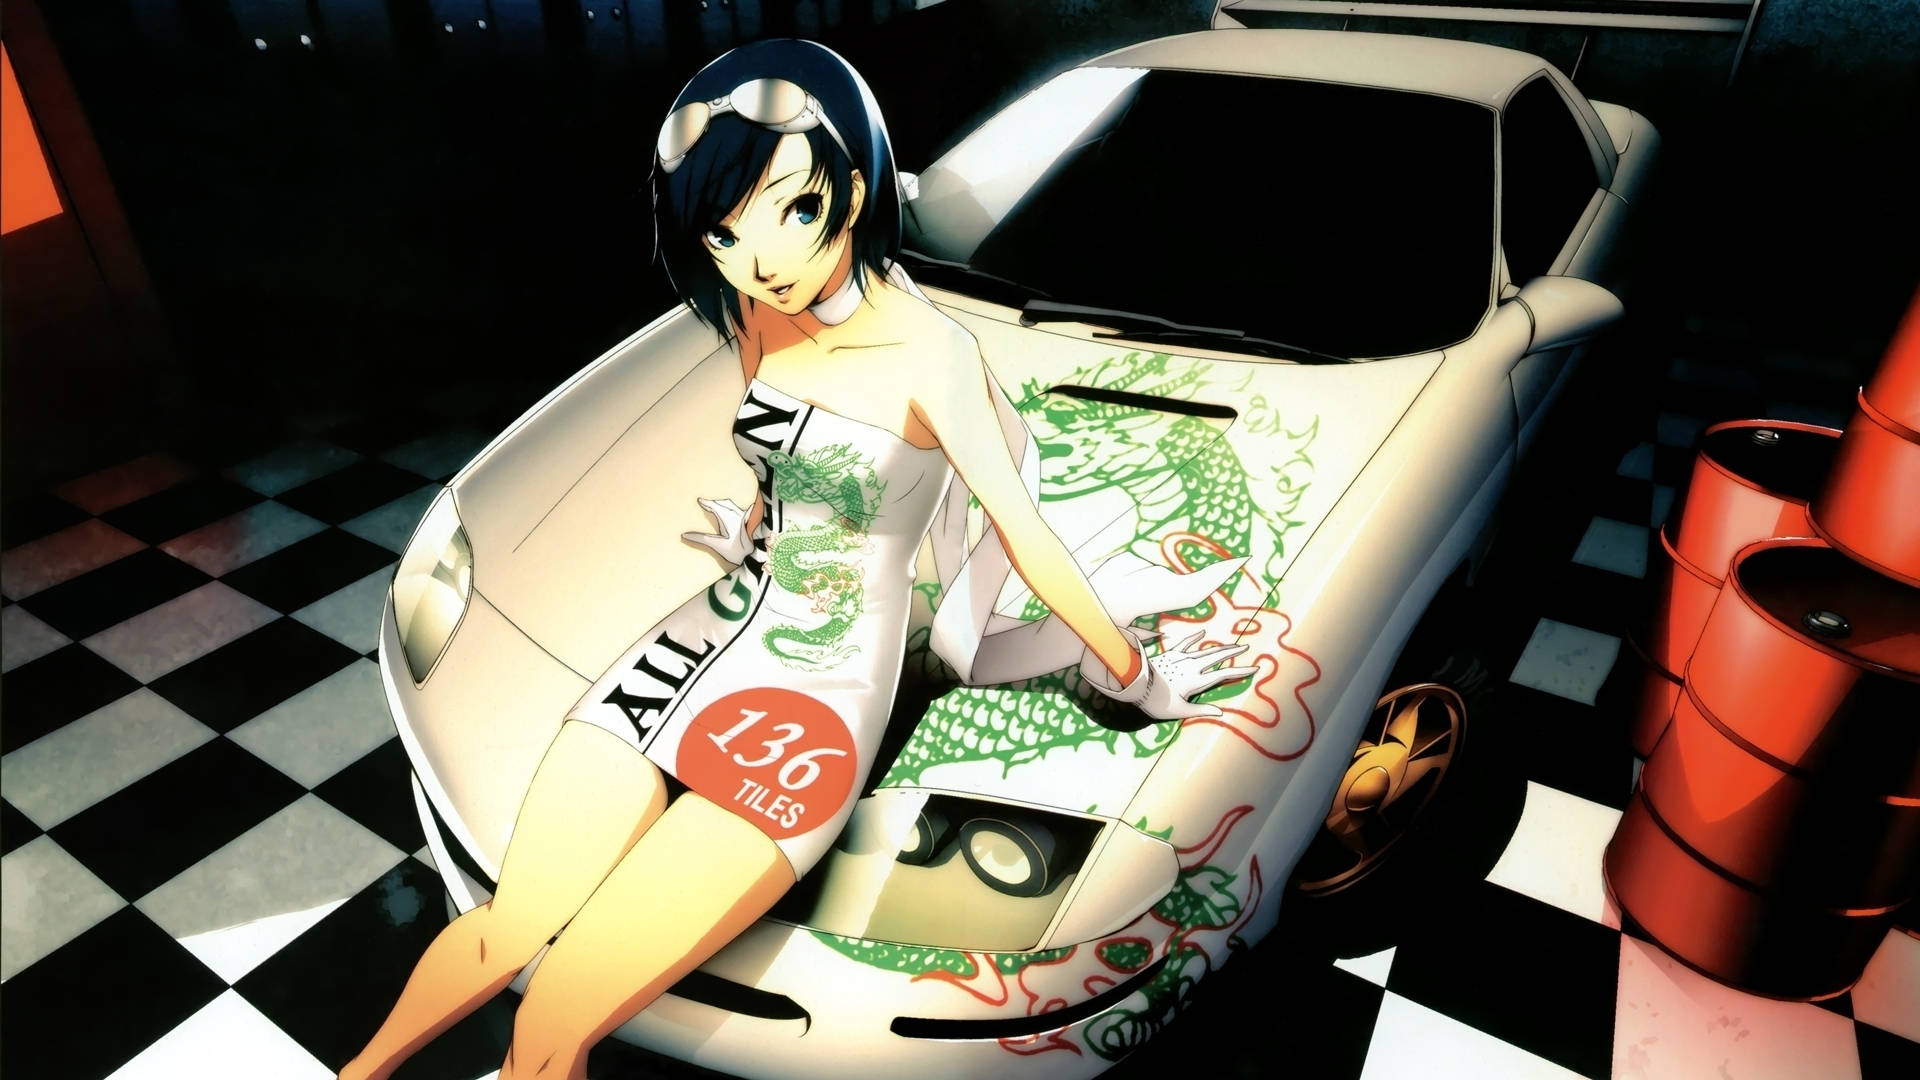 Girl On The Hood Of A Car Anime Wallpaper